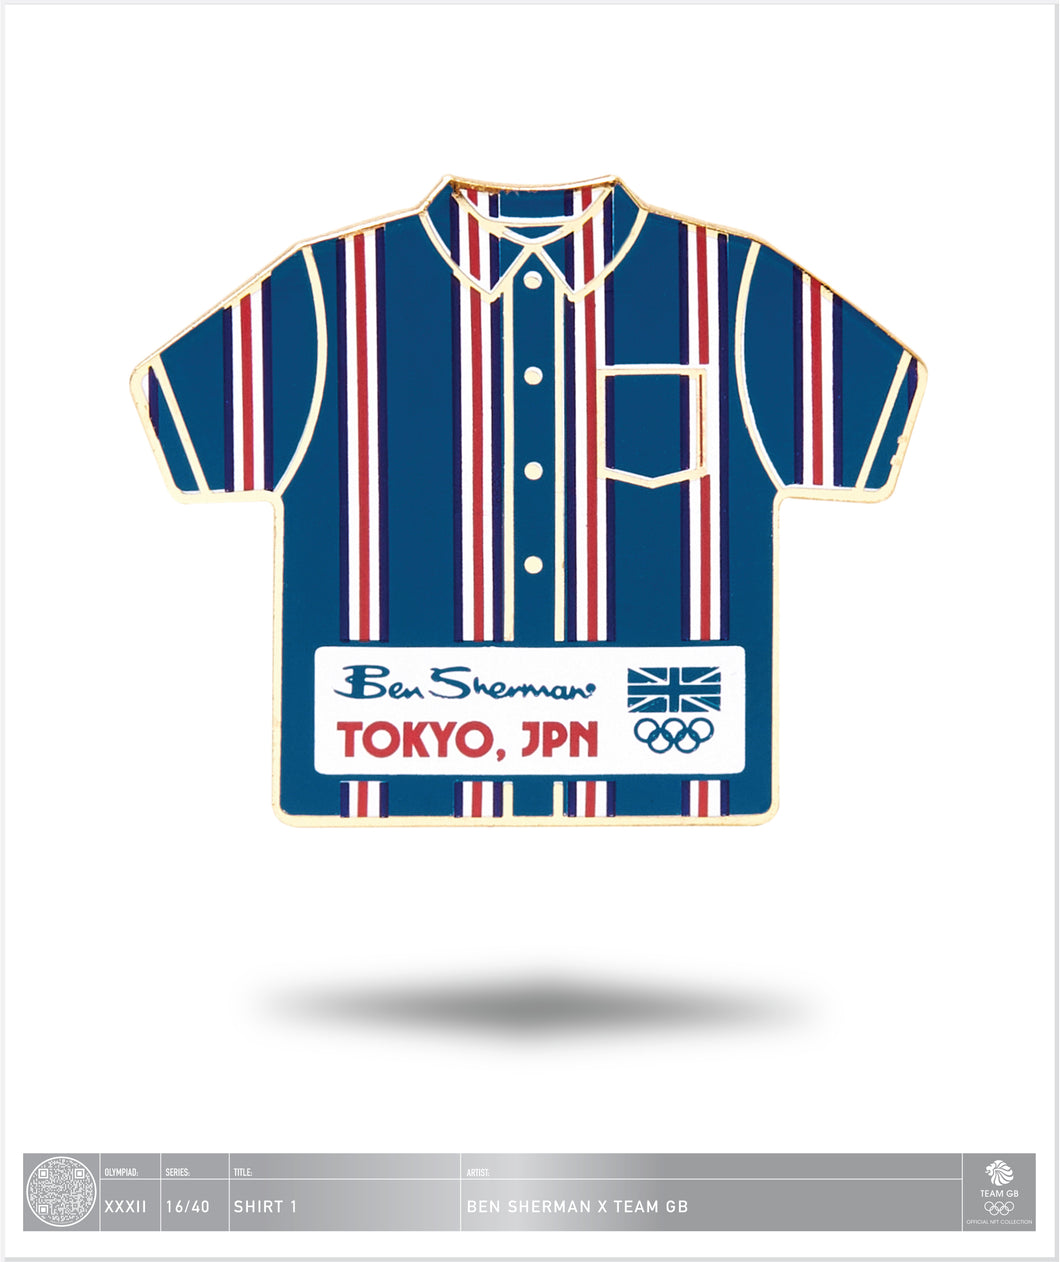 Ben Sherman Tokyo - Shirt 1 - 16 / 40